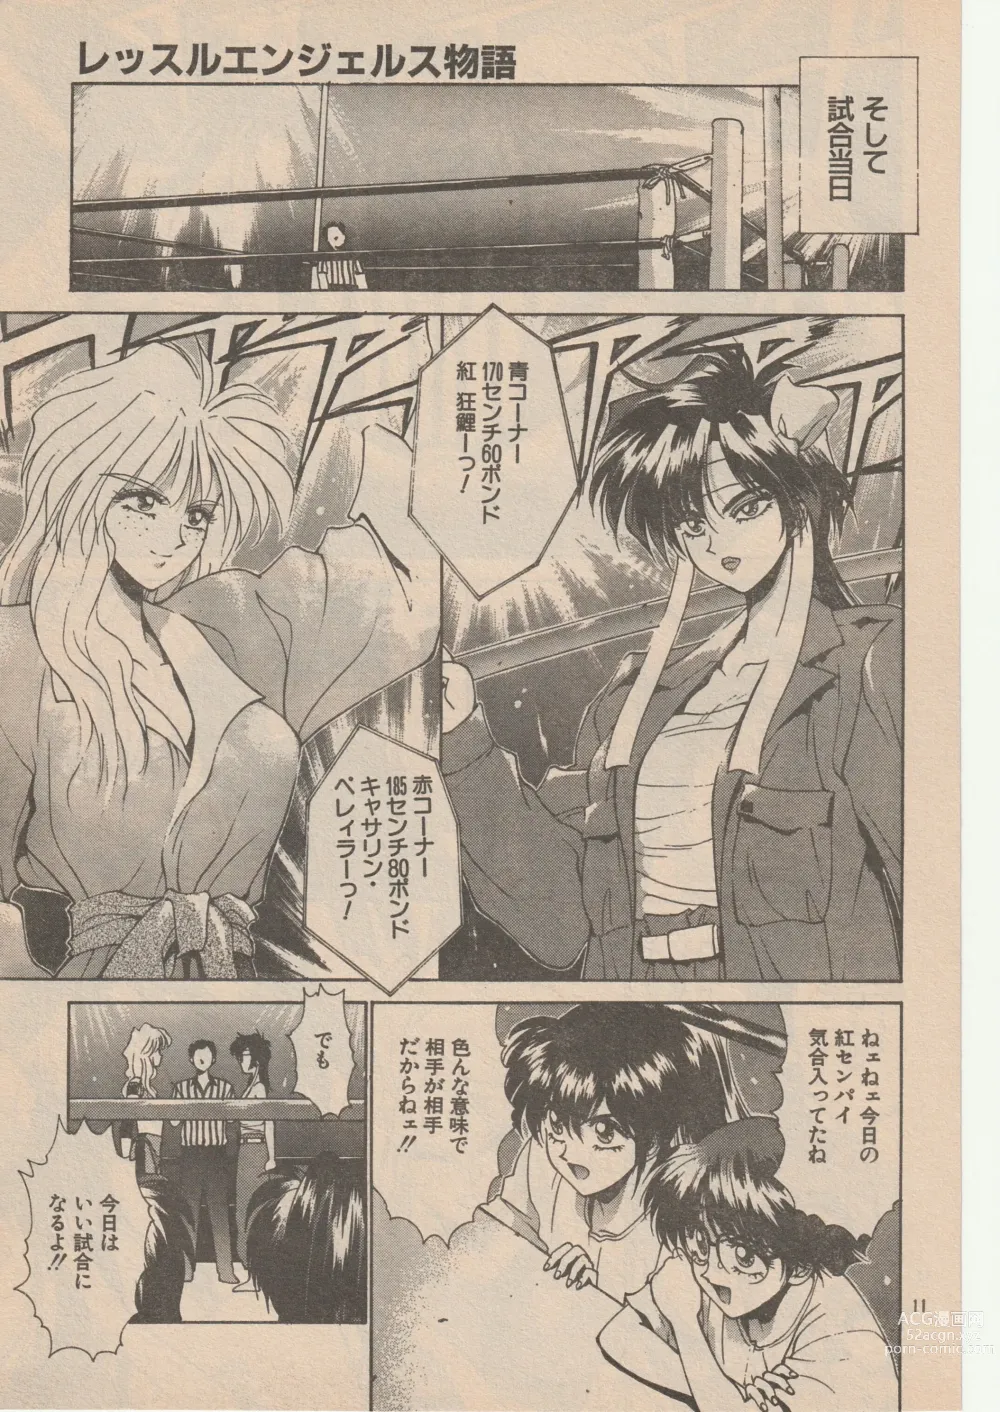 Page 11 of manga Wrestle Angels Monogatari